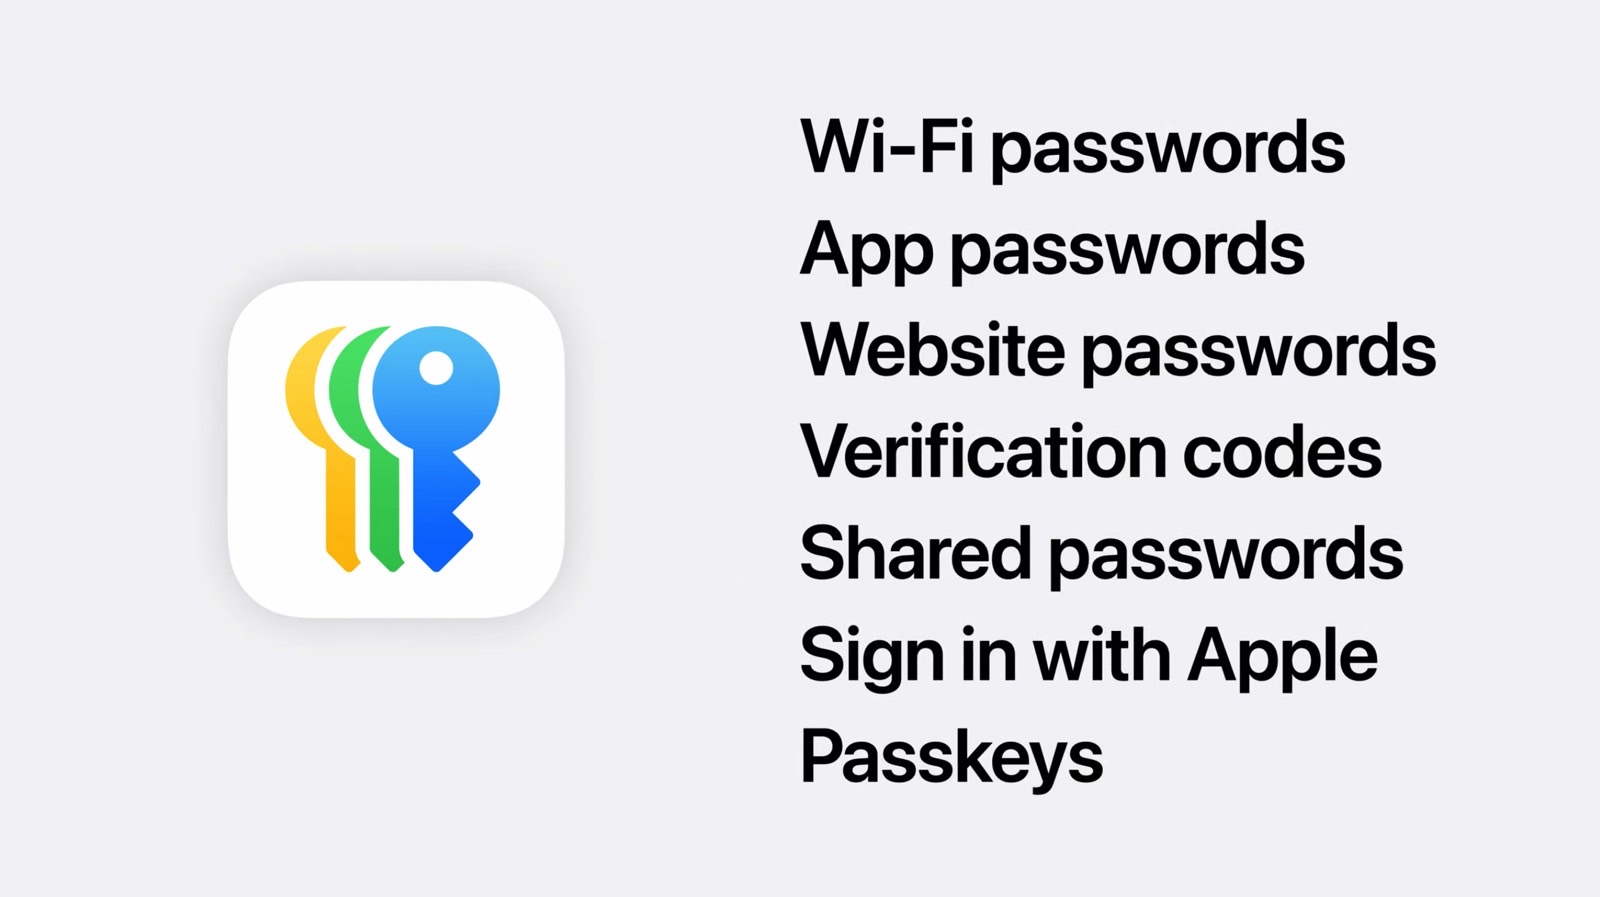 Passwords app on iOS 18, macOS Sequoia, and iPadOS 18